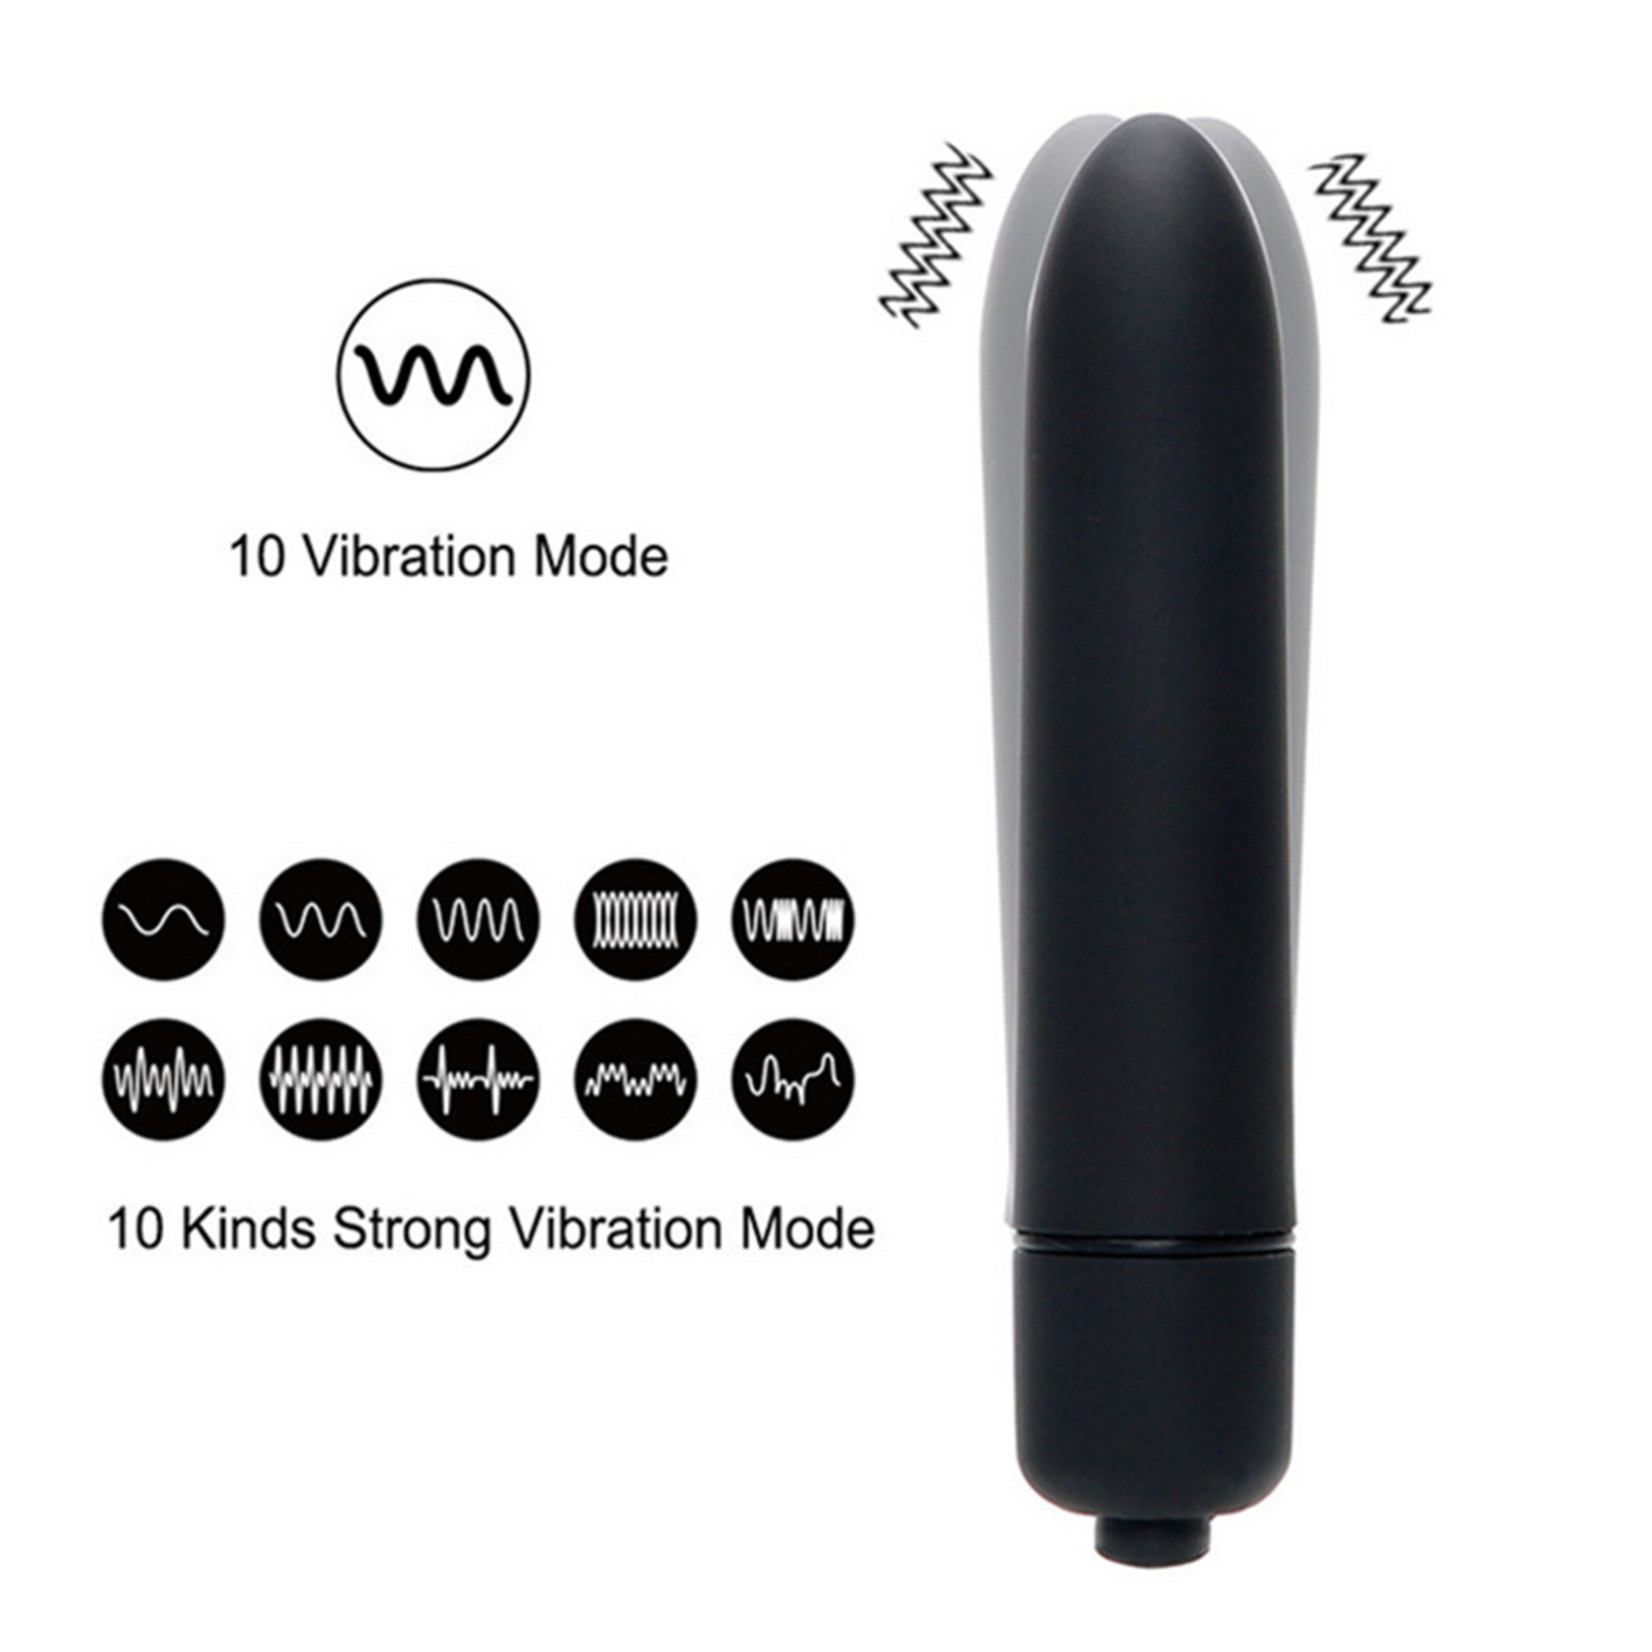 10 Speed Vibration Clit Stimulation Adult Sex Toy Vibrating Jump Love Egg Mini Bullet G Spot Vagina Vibrator for Women Female picture pic image